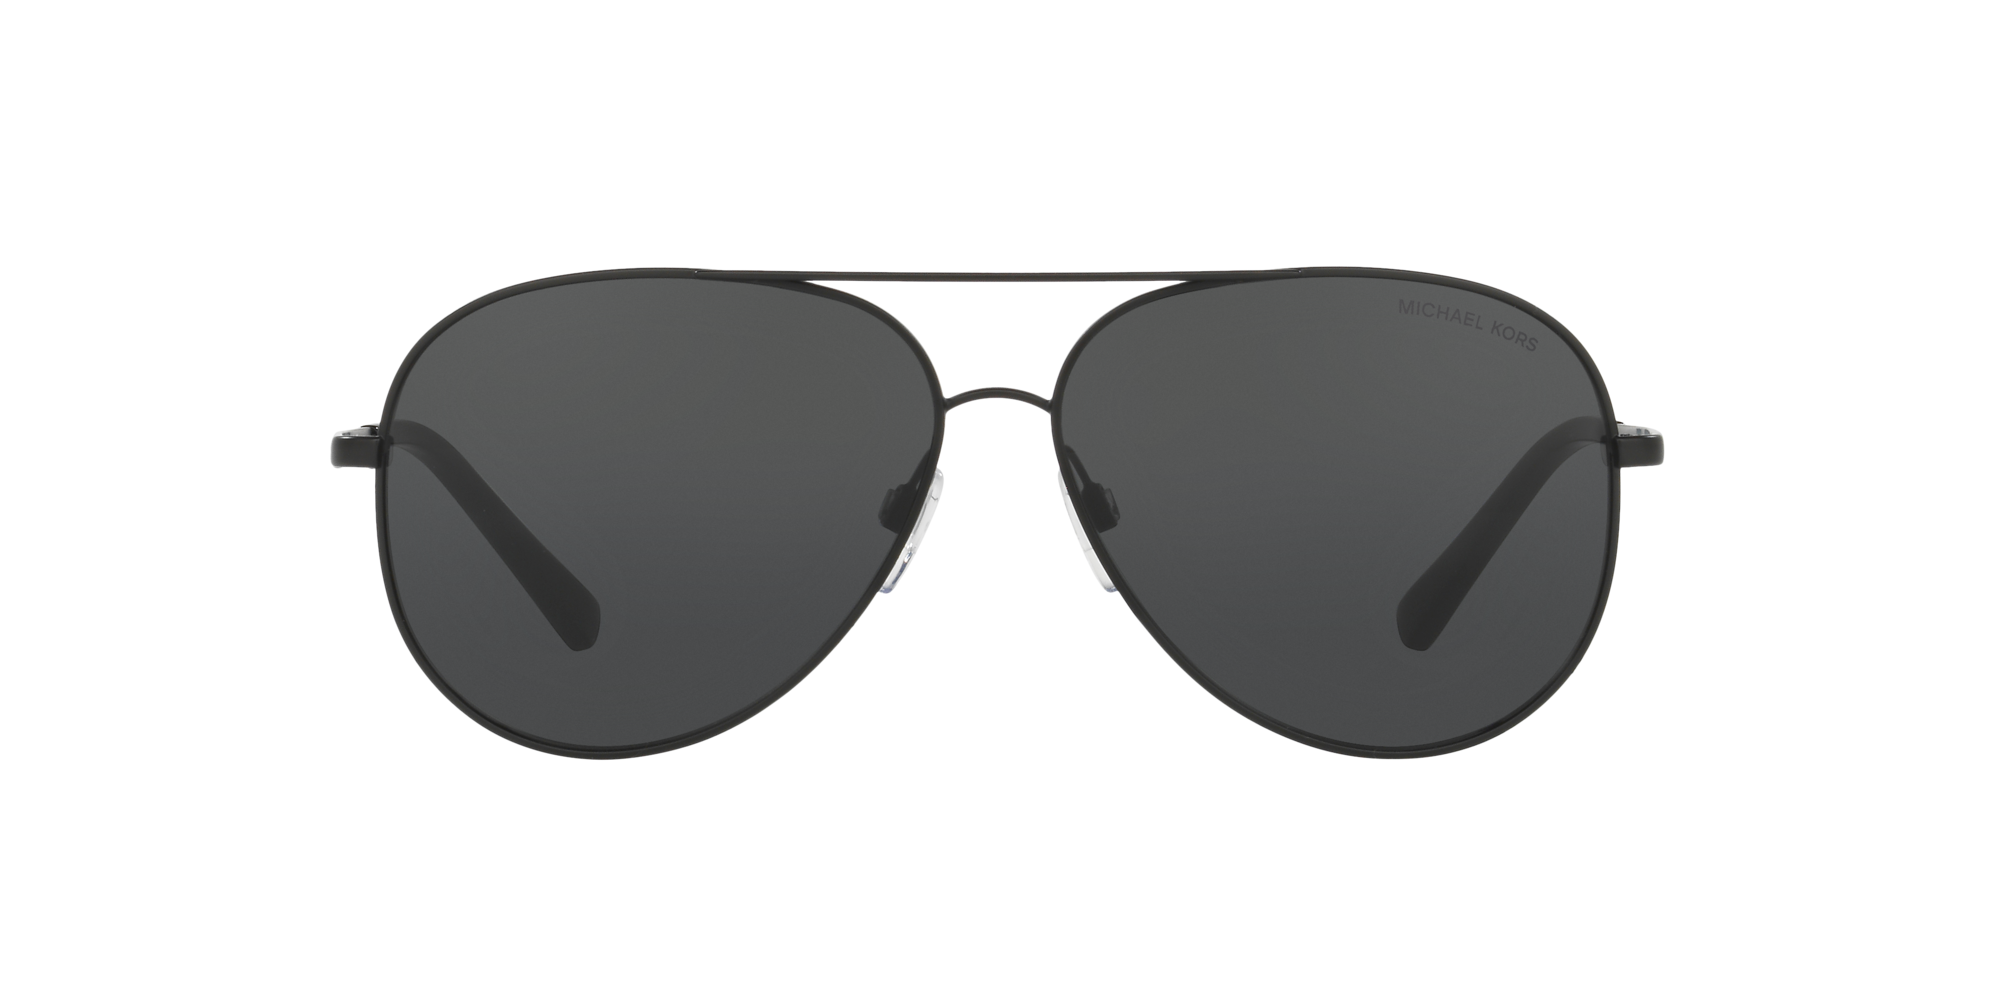 Michael Kors Kendall I 5016 Silver Womens Light Tint Sunglasses  xTrend